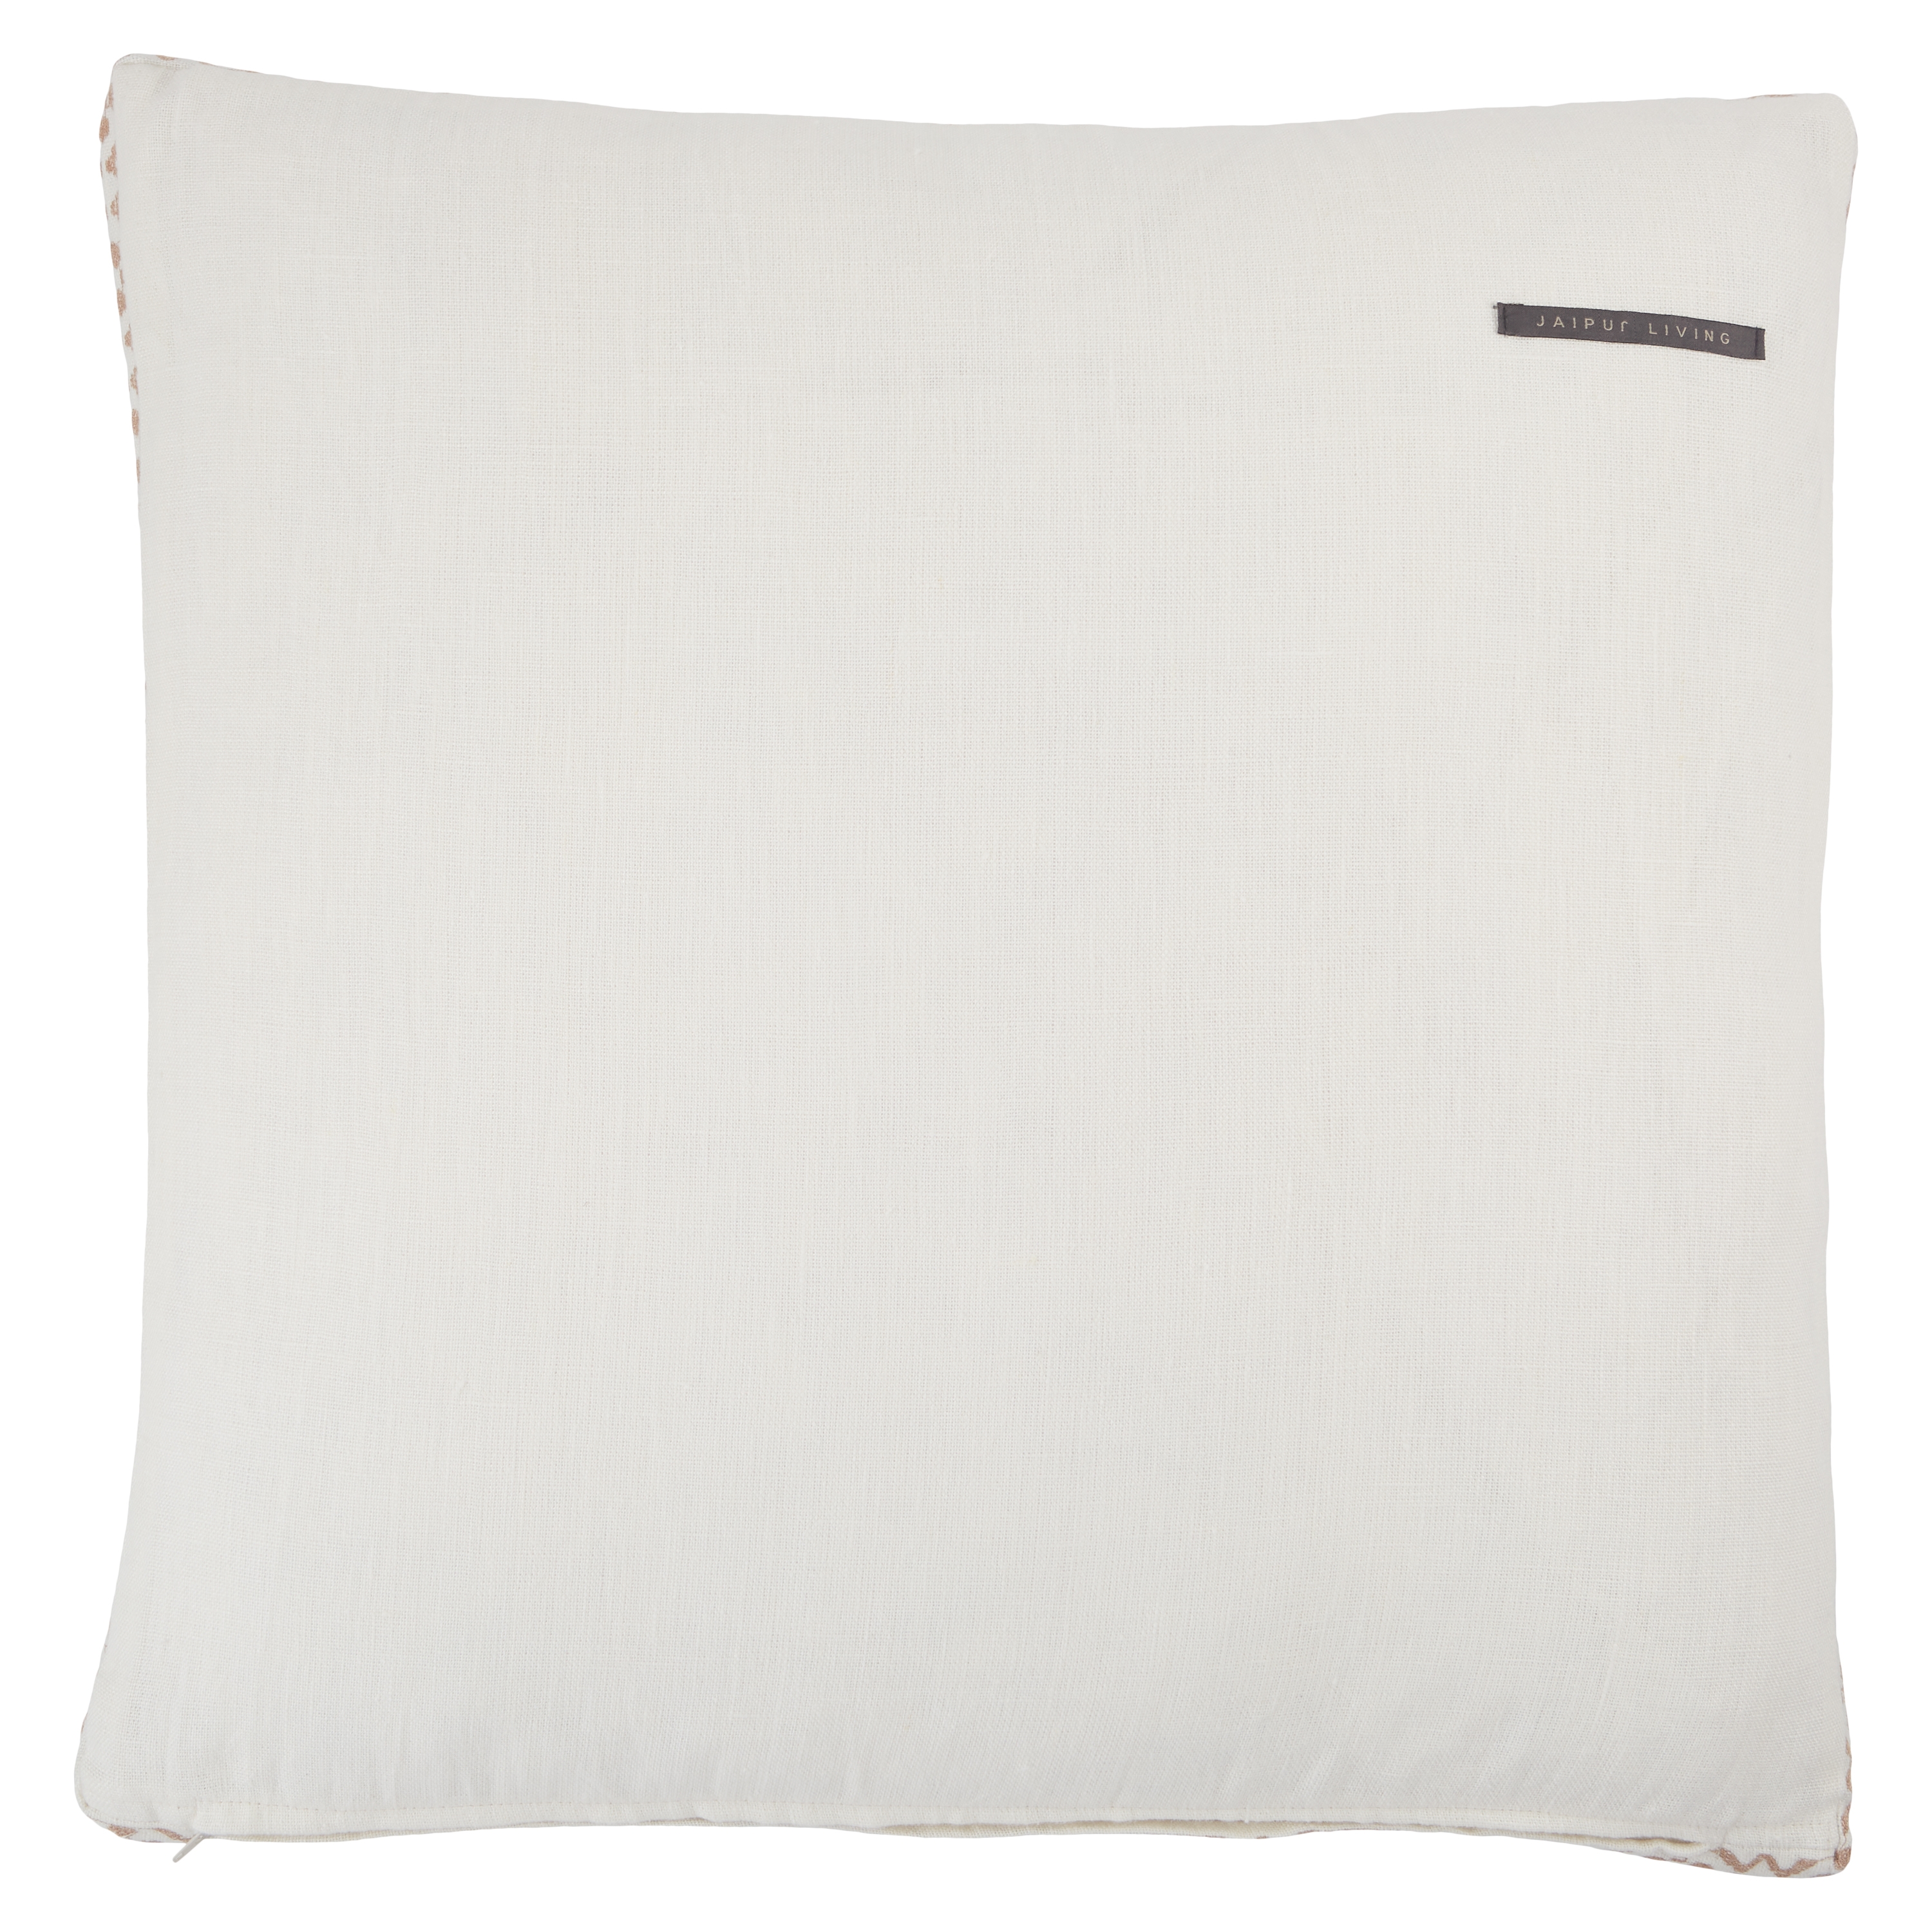 Design (US) Ivory 24"X24" Pillow - Image 1